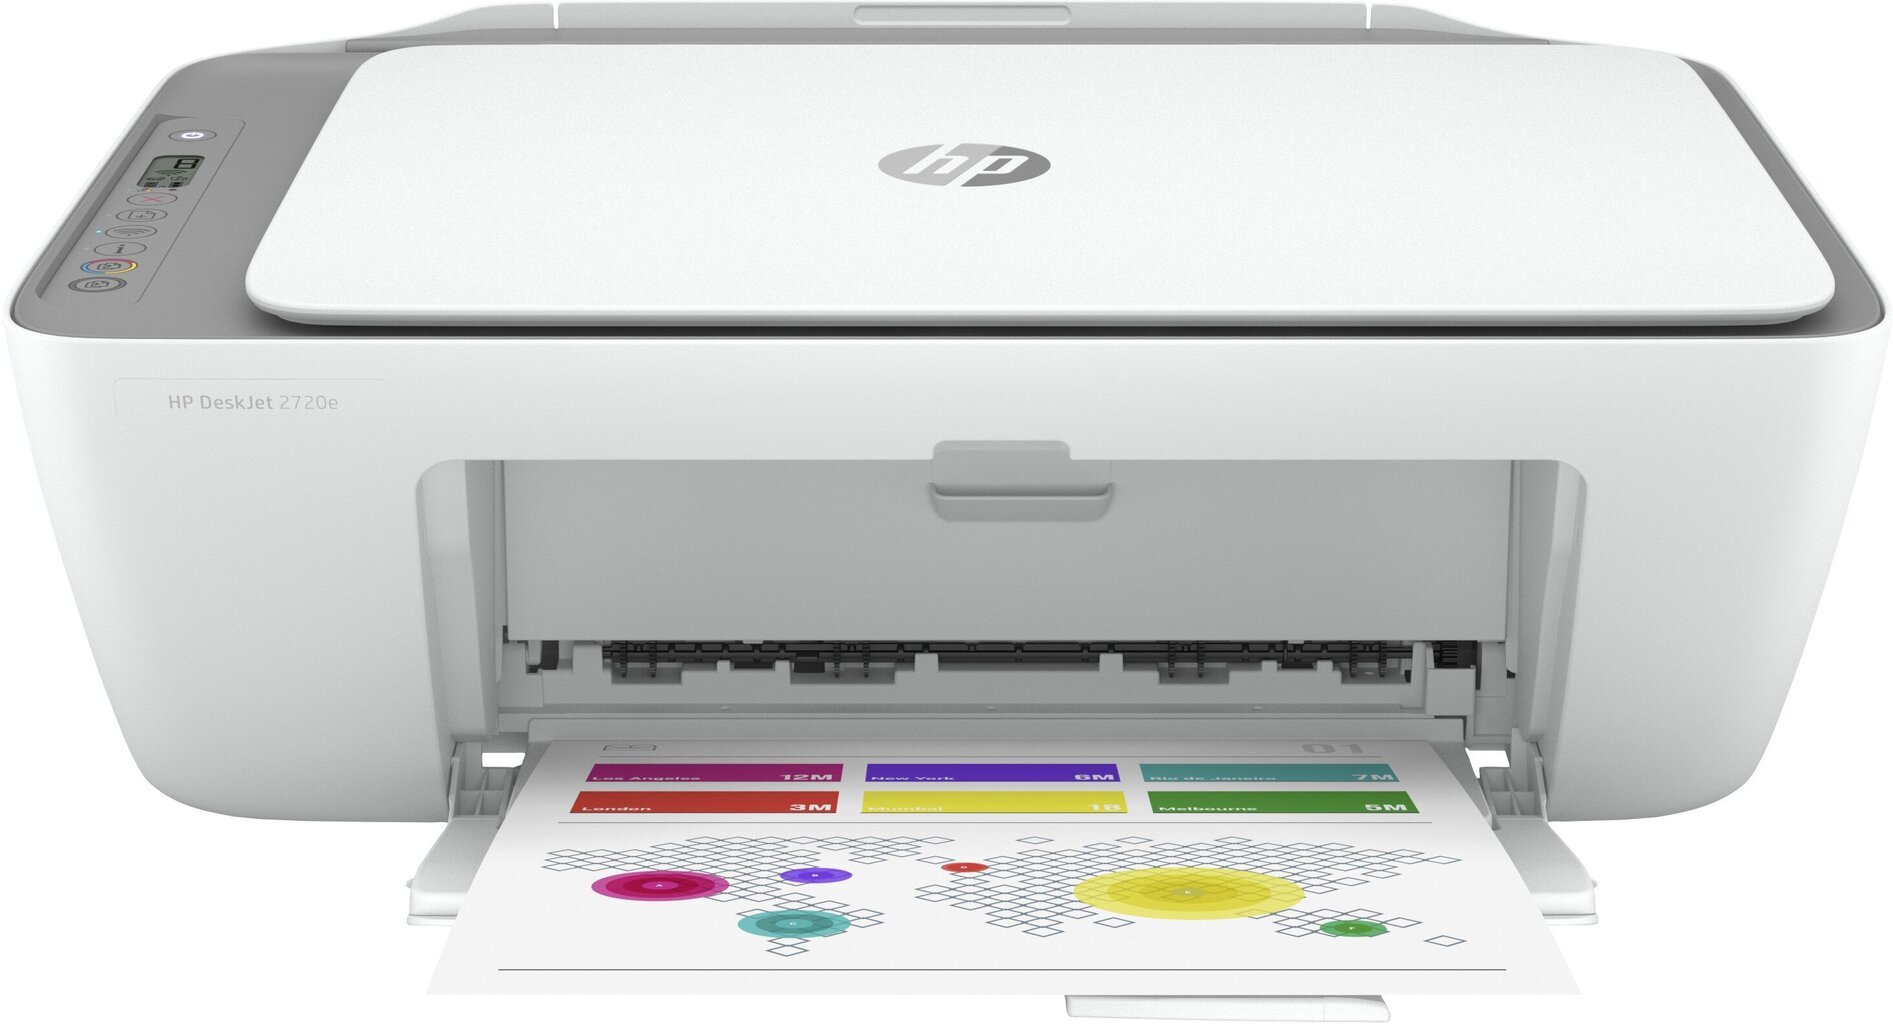 Spausdintuvas HP DeskJet 2720e, spalvotas kaina | pigu.lt